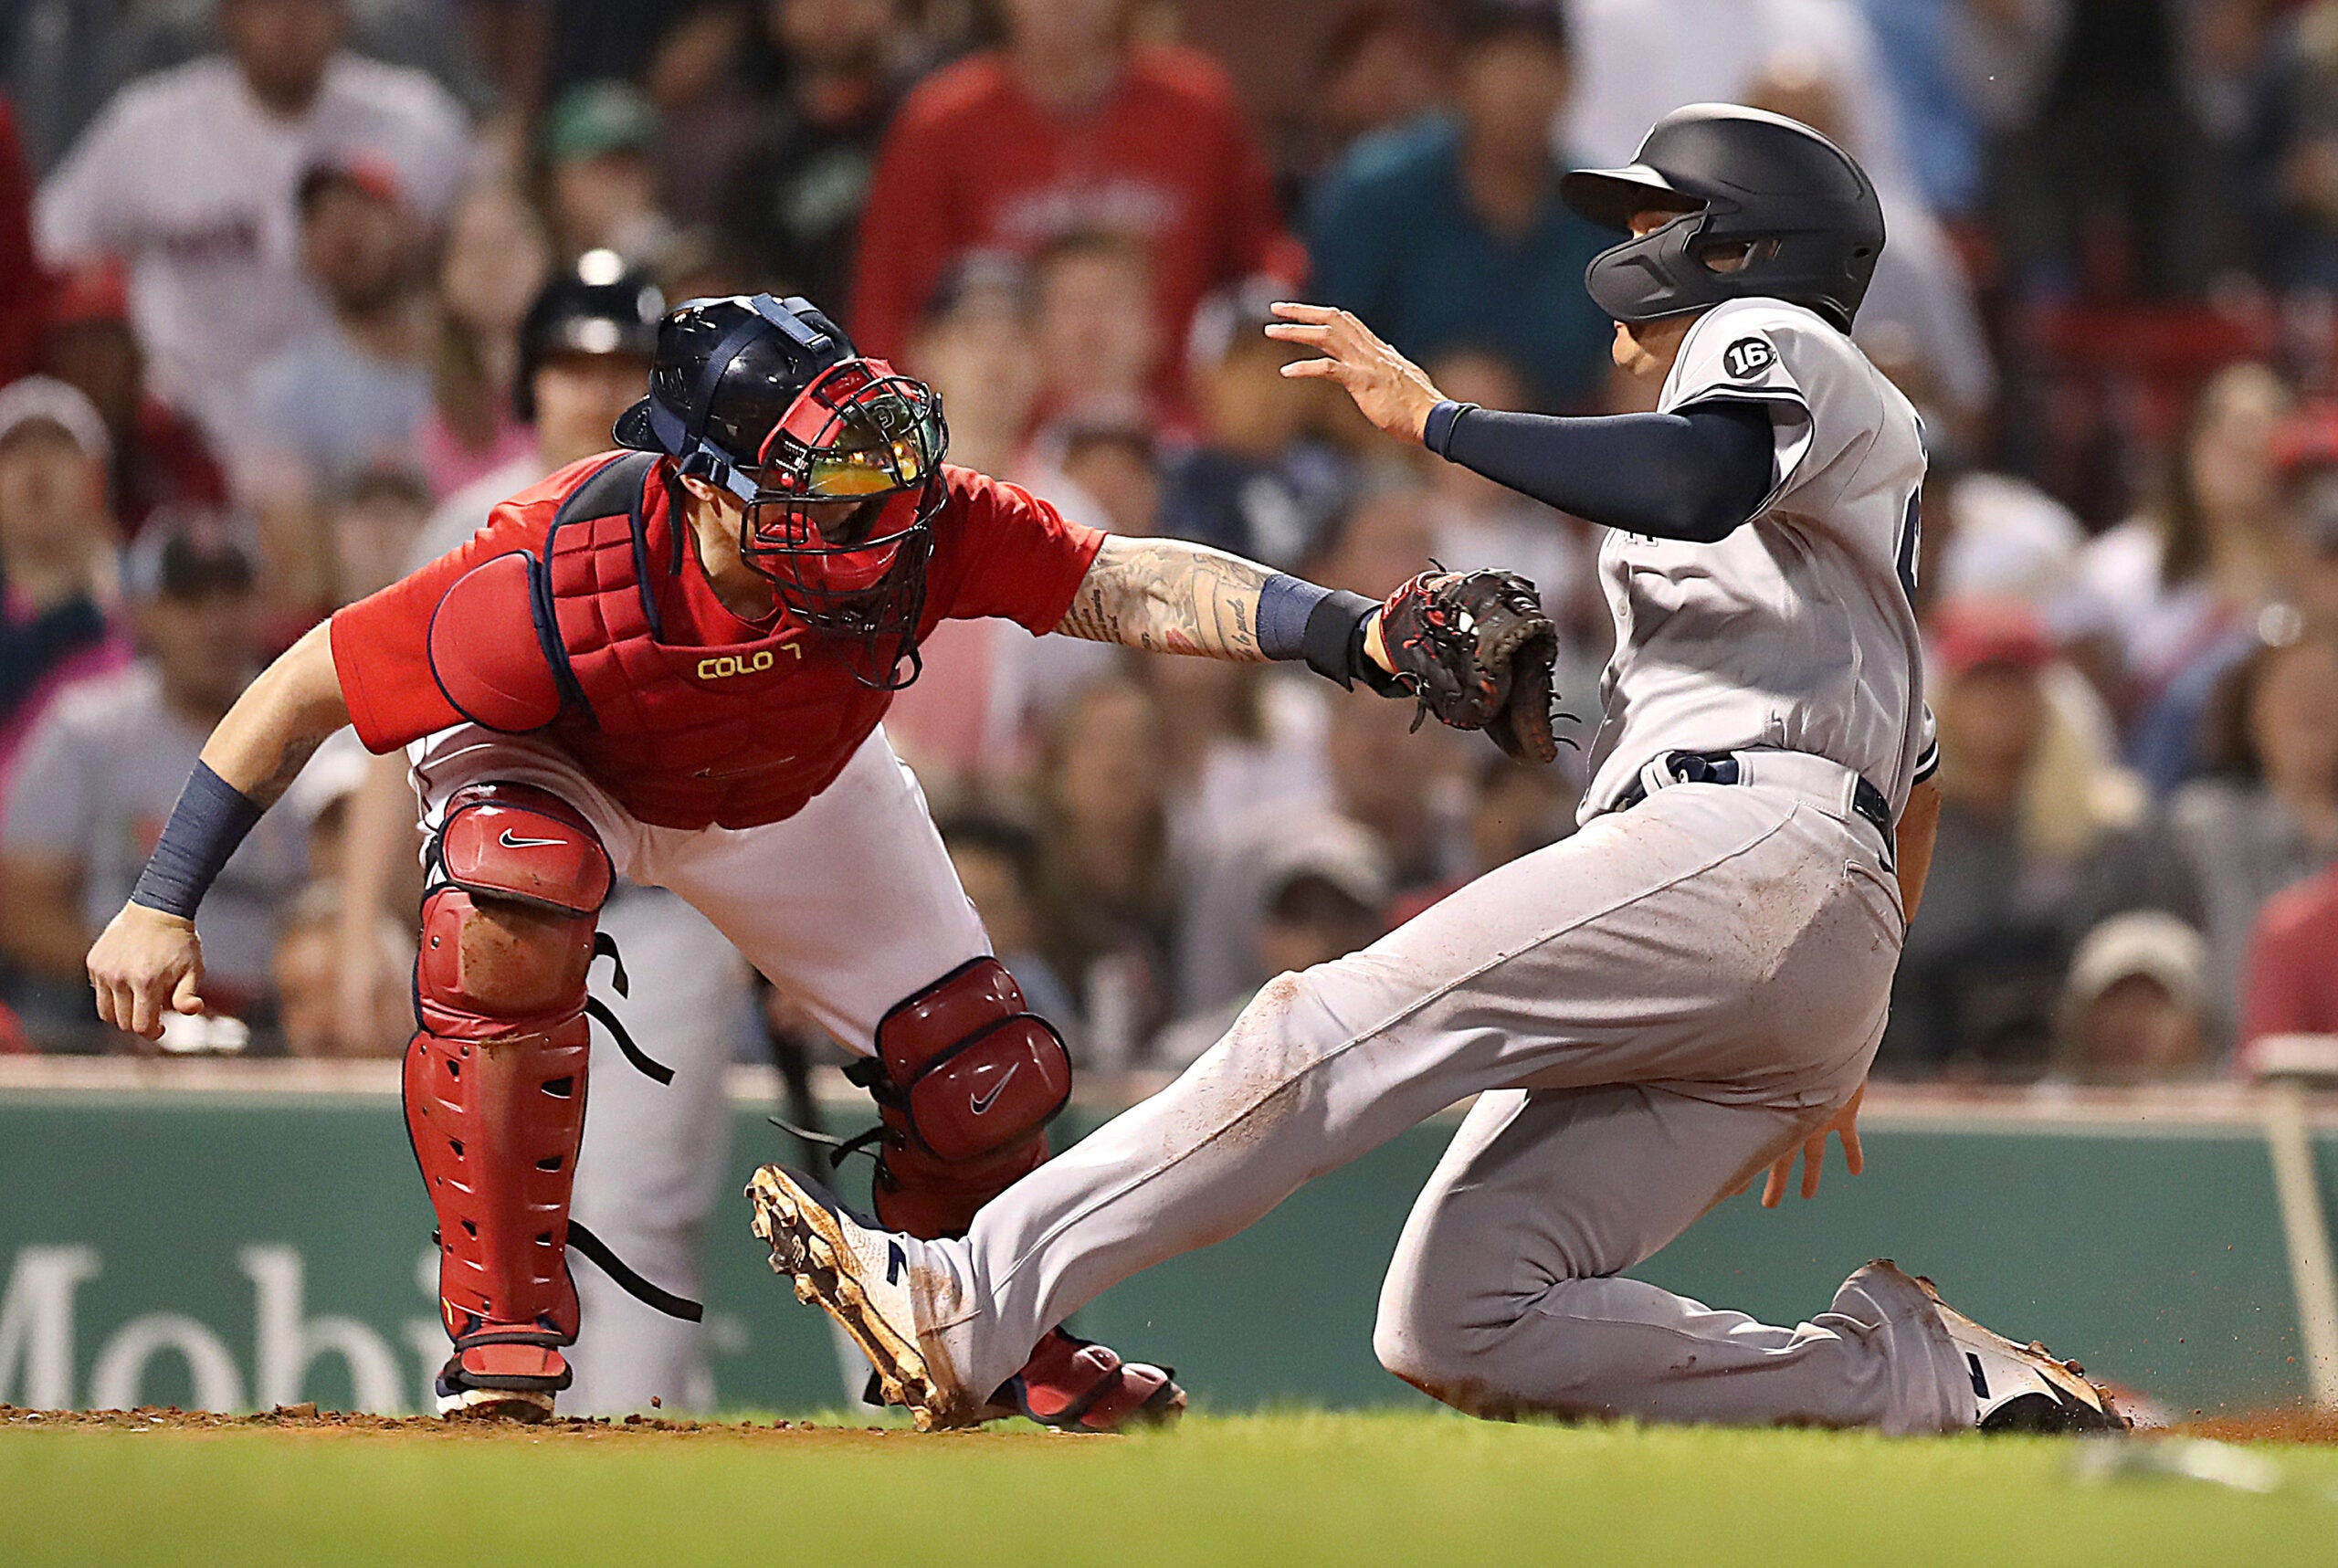 Why the Red Sox rewarded Dustin Pedroia - The Boston Globe